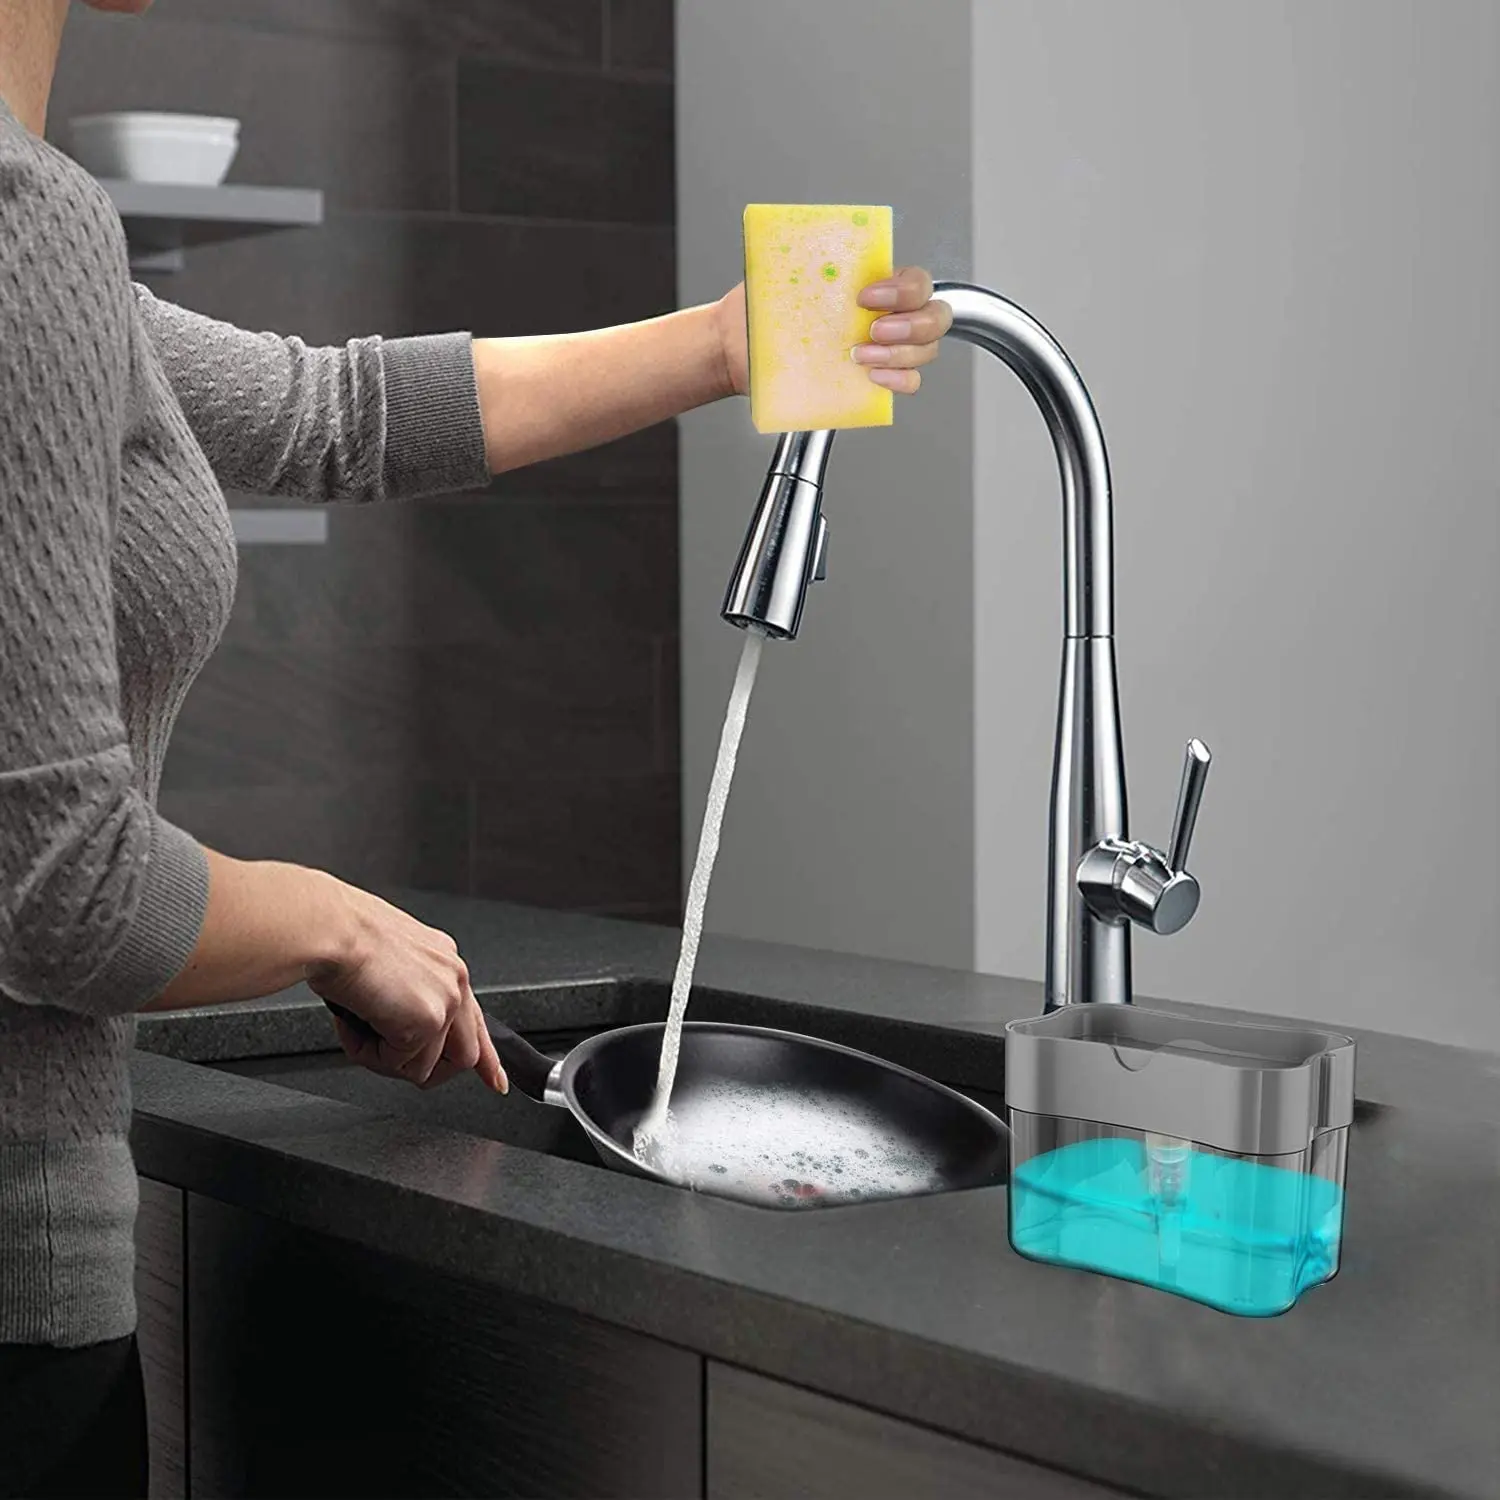 Shemax Dishwashing Soap Dispenser, Sponge Holder 2 in1 Dish liquid Dispenser Caddy,Countertop Soap Pump